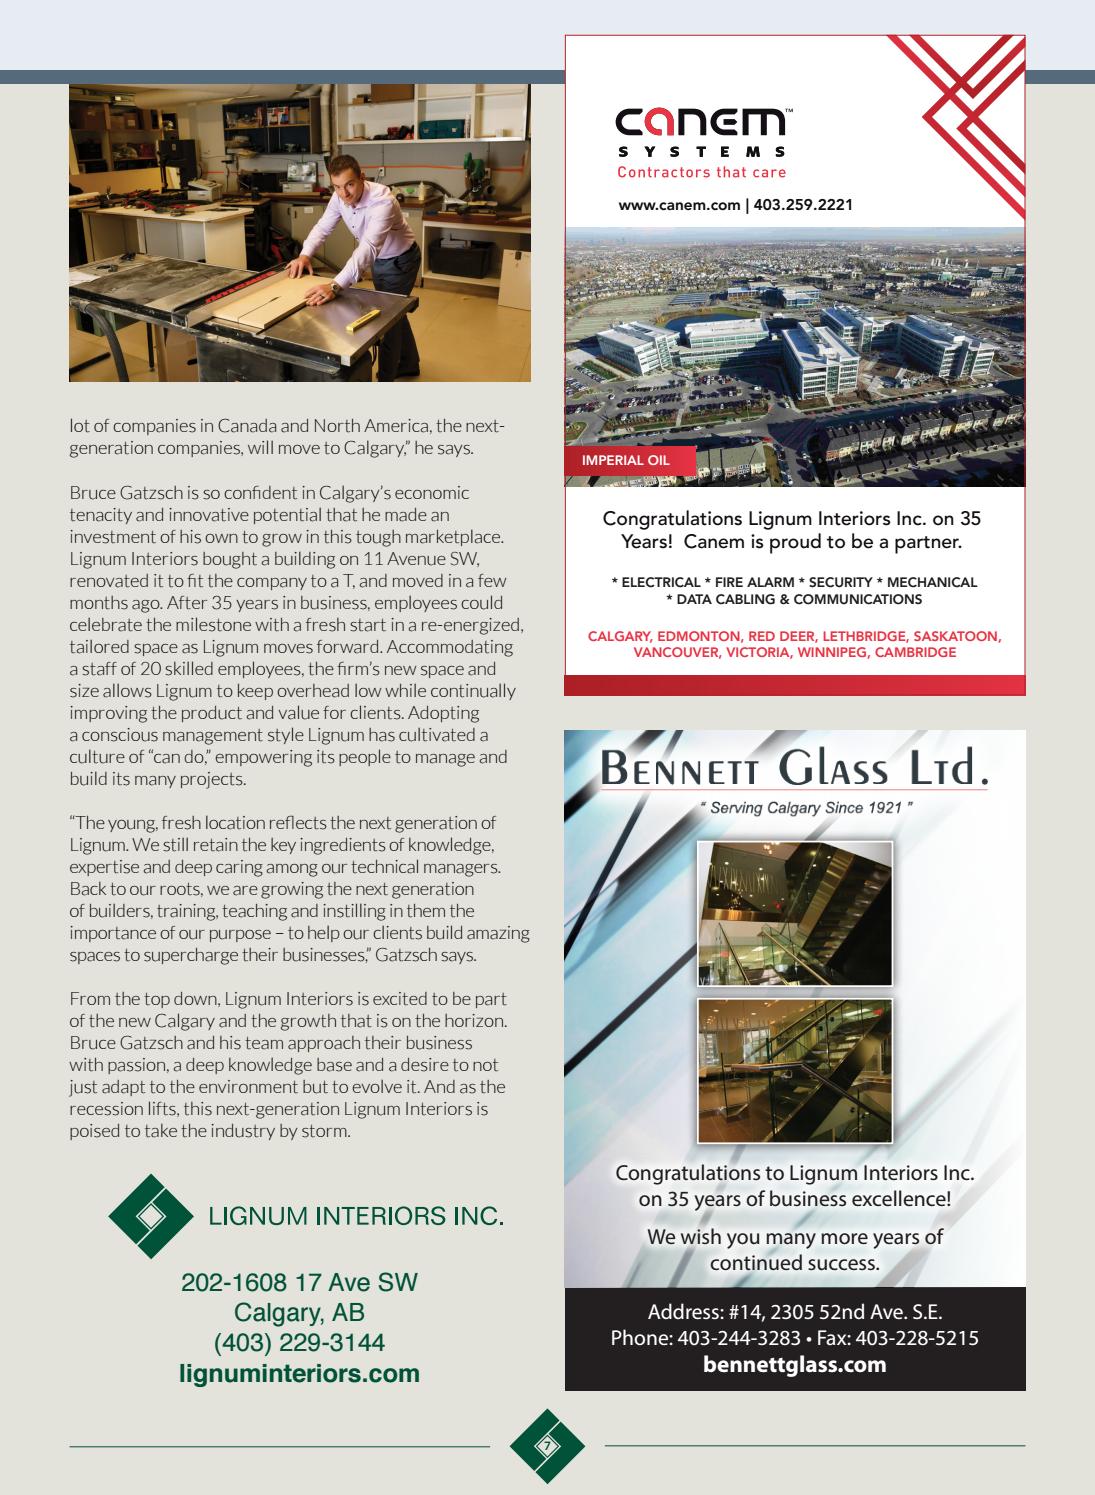 Business in Calgary Magazine - Business Profile for Lignum Interiors